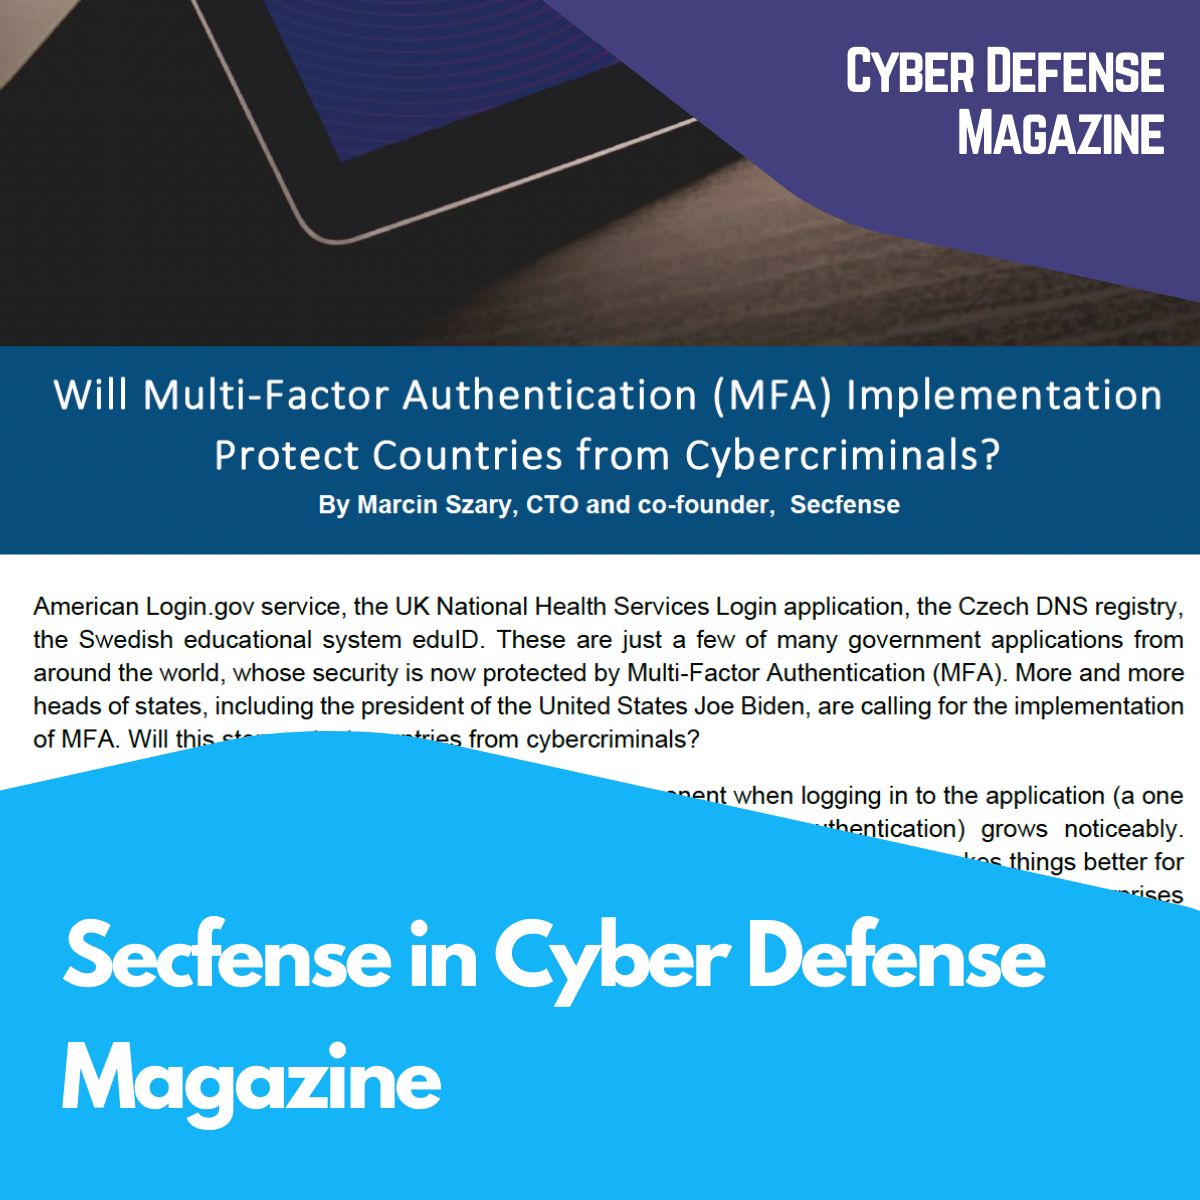 Secfense in Cyber Defense Magazine